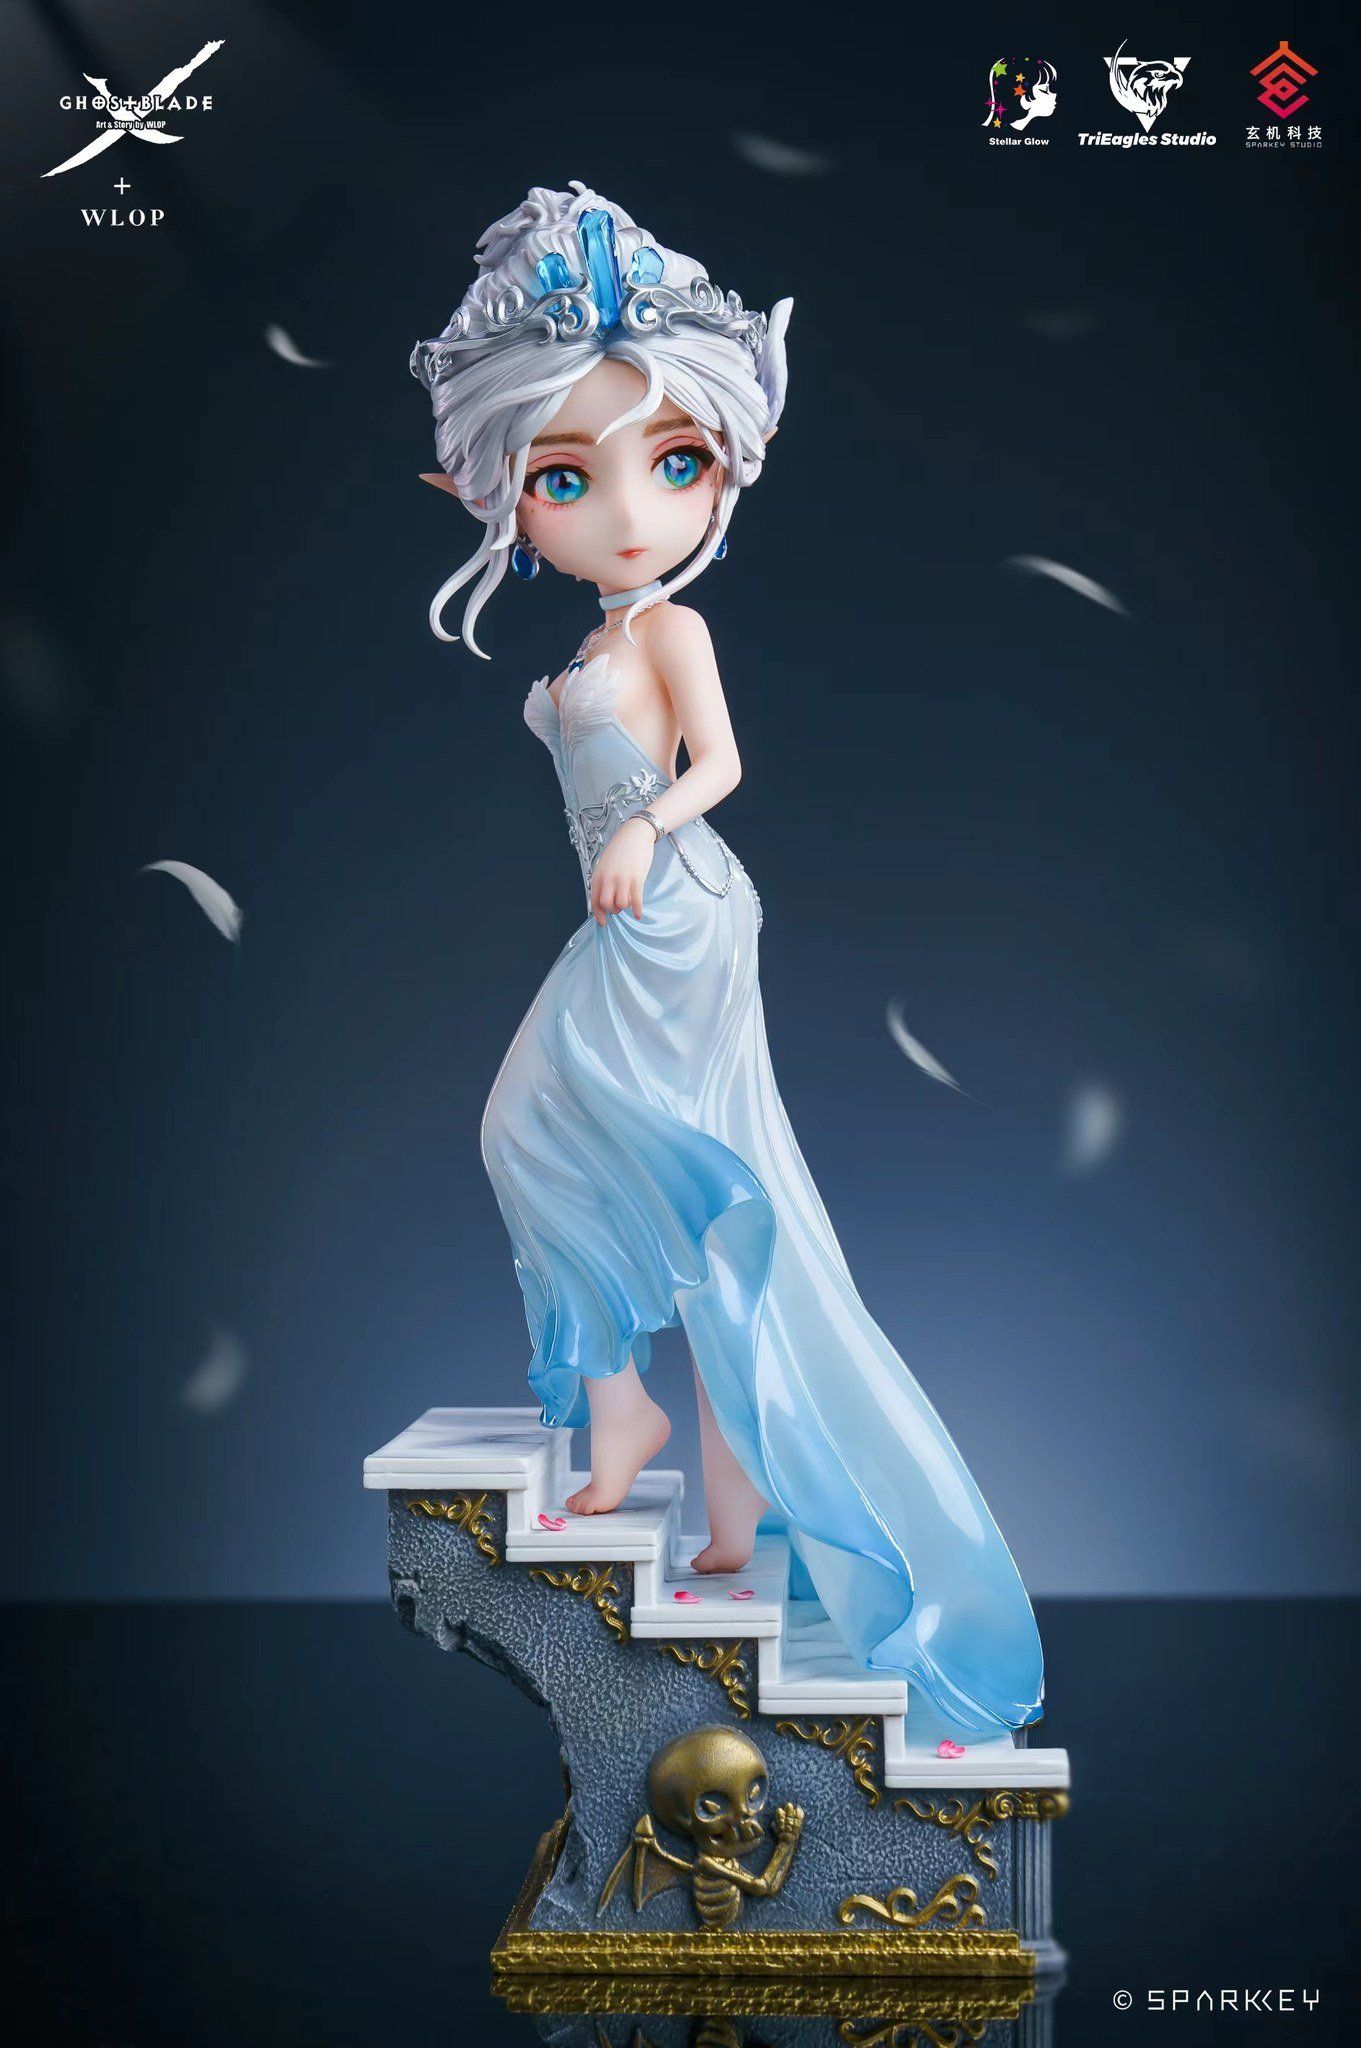  Yan Princess Chibi - GhostBlade ( licensed ) - Stella Grow Studio 